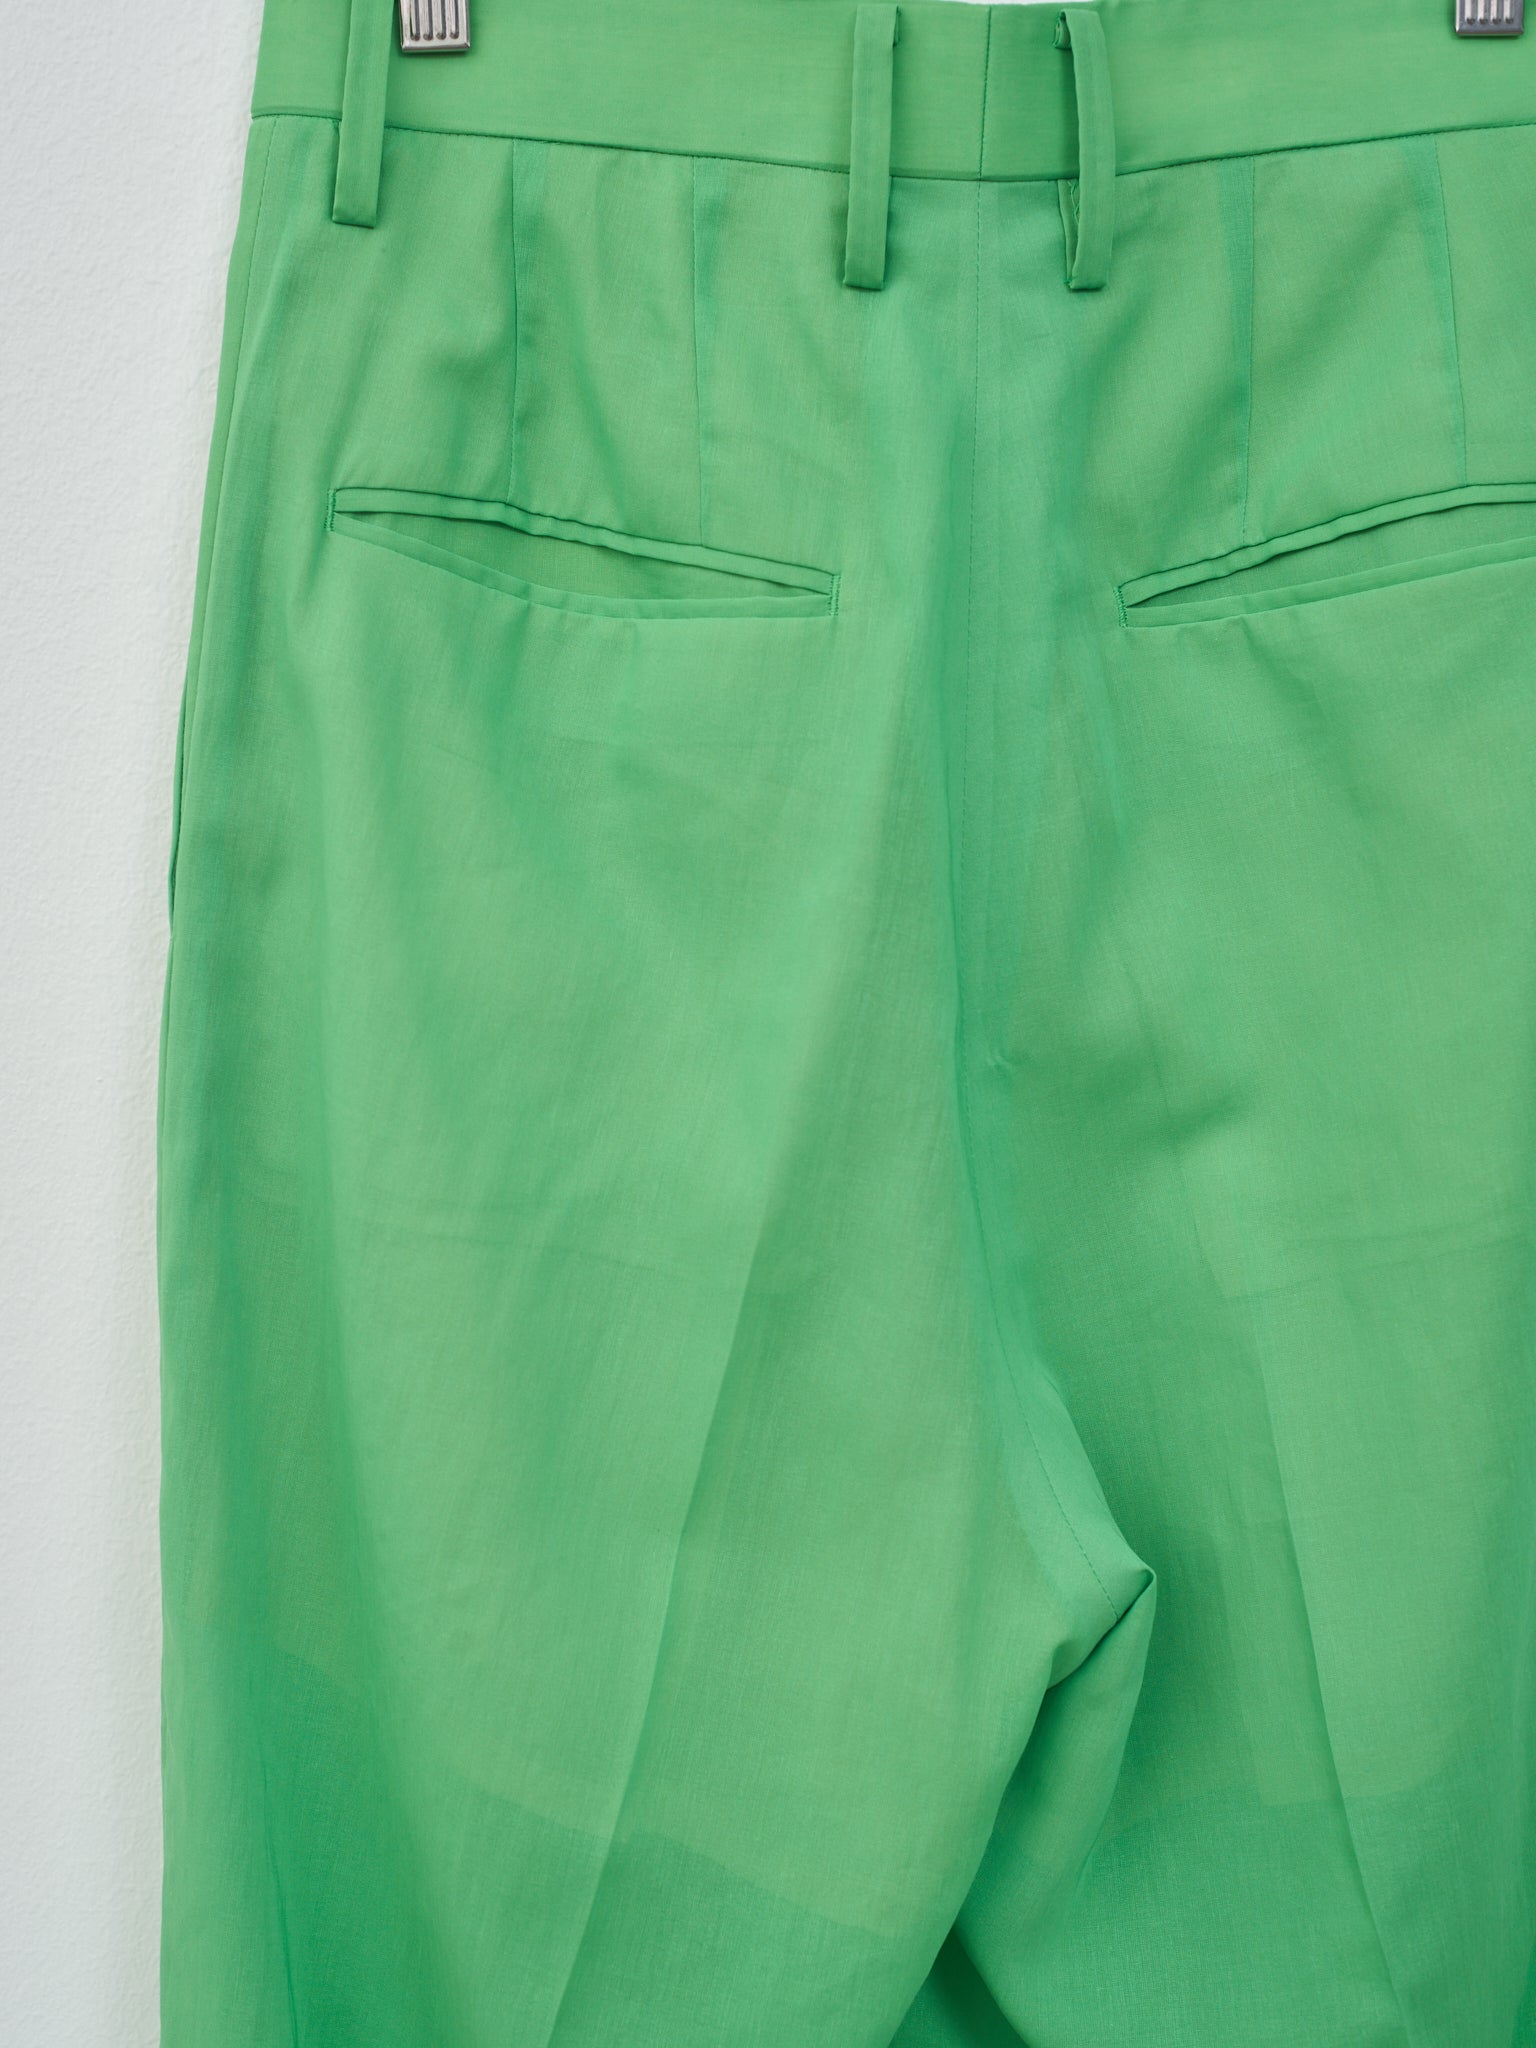 Namu Shop - Auralee Hard Twist Finx Organdy Pants - Green